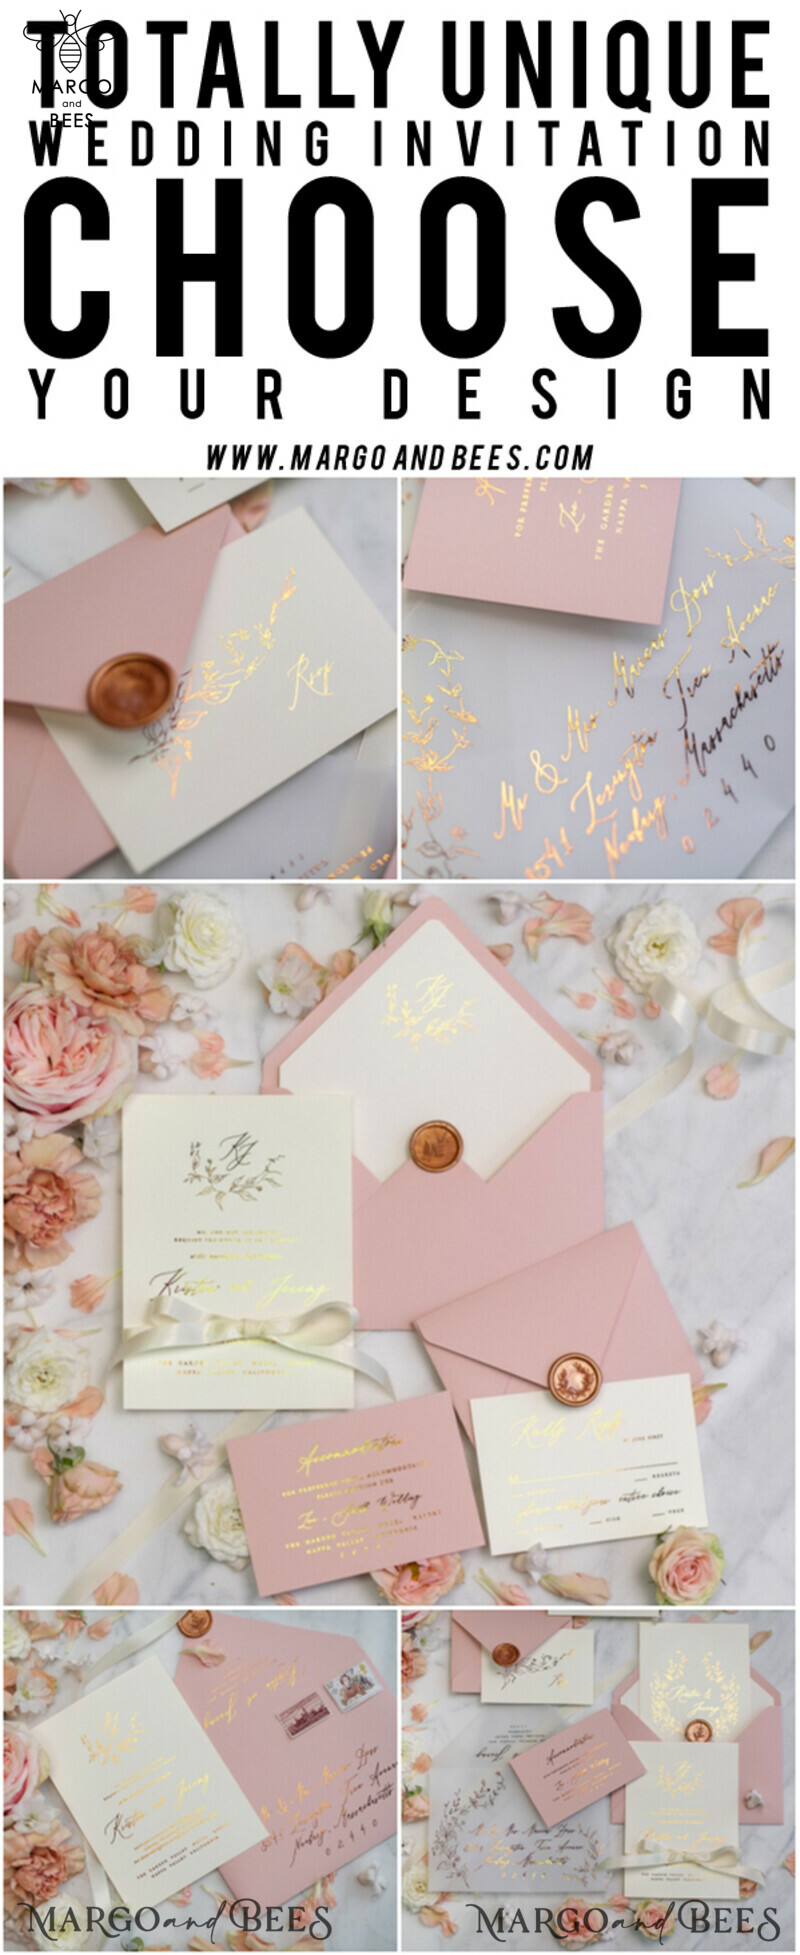 Bespoke Vellum Wedding Invitation Suite: Romantic Blush Pink and Glamour Gold Foil for an Elegant Golden Affair-40